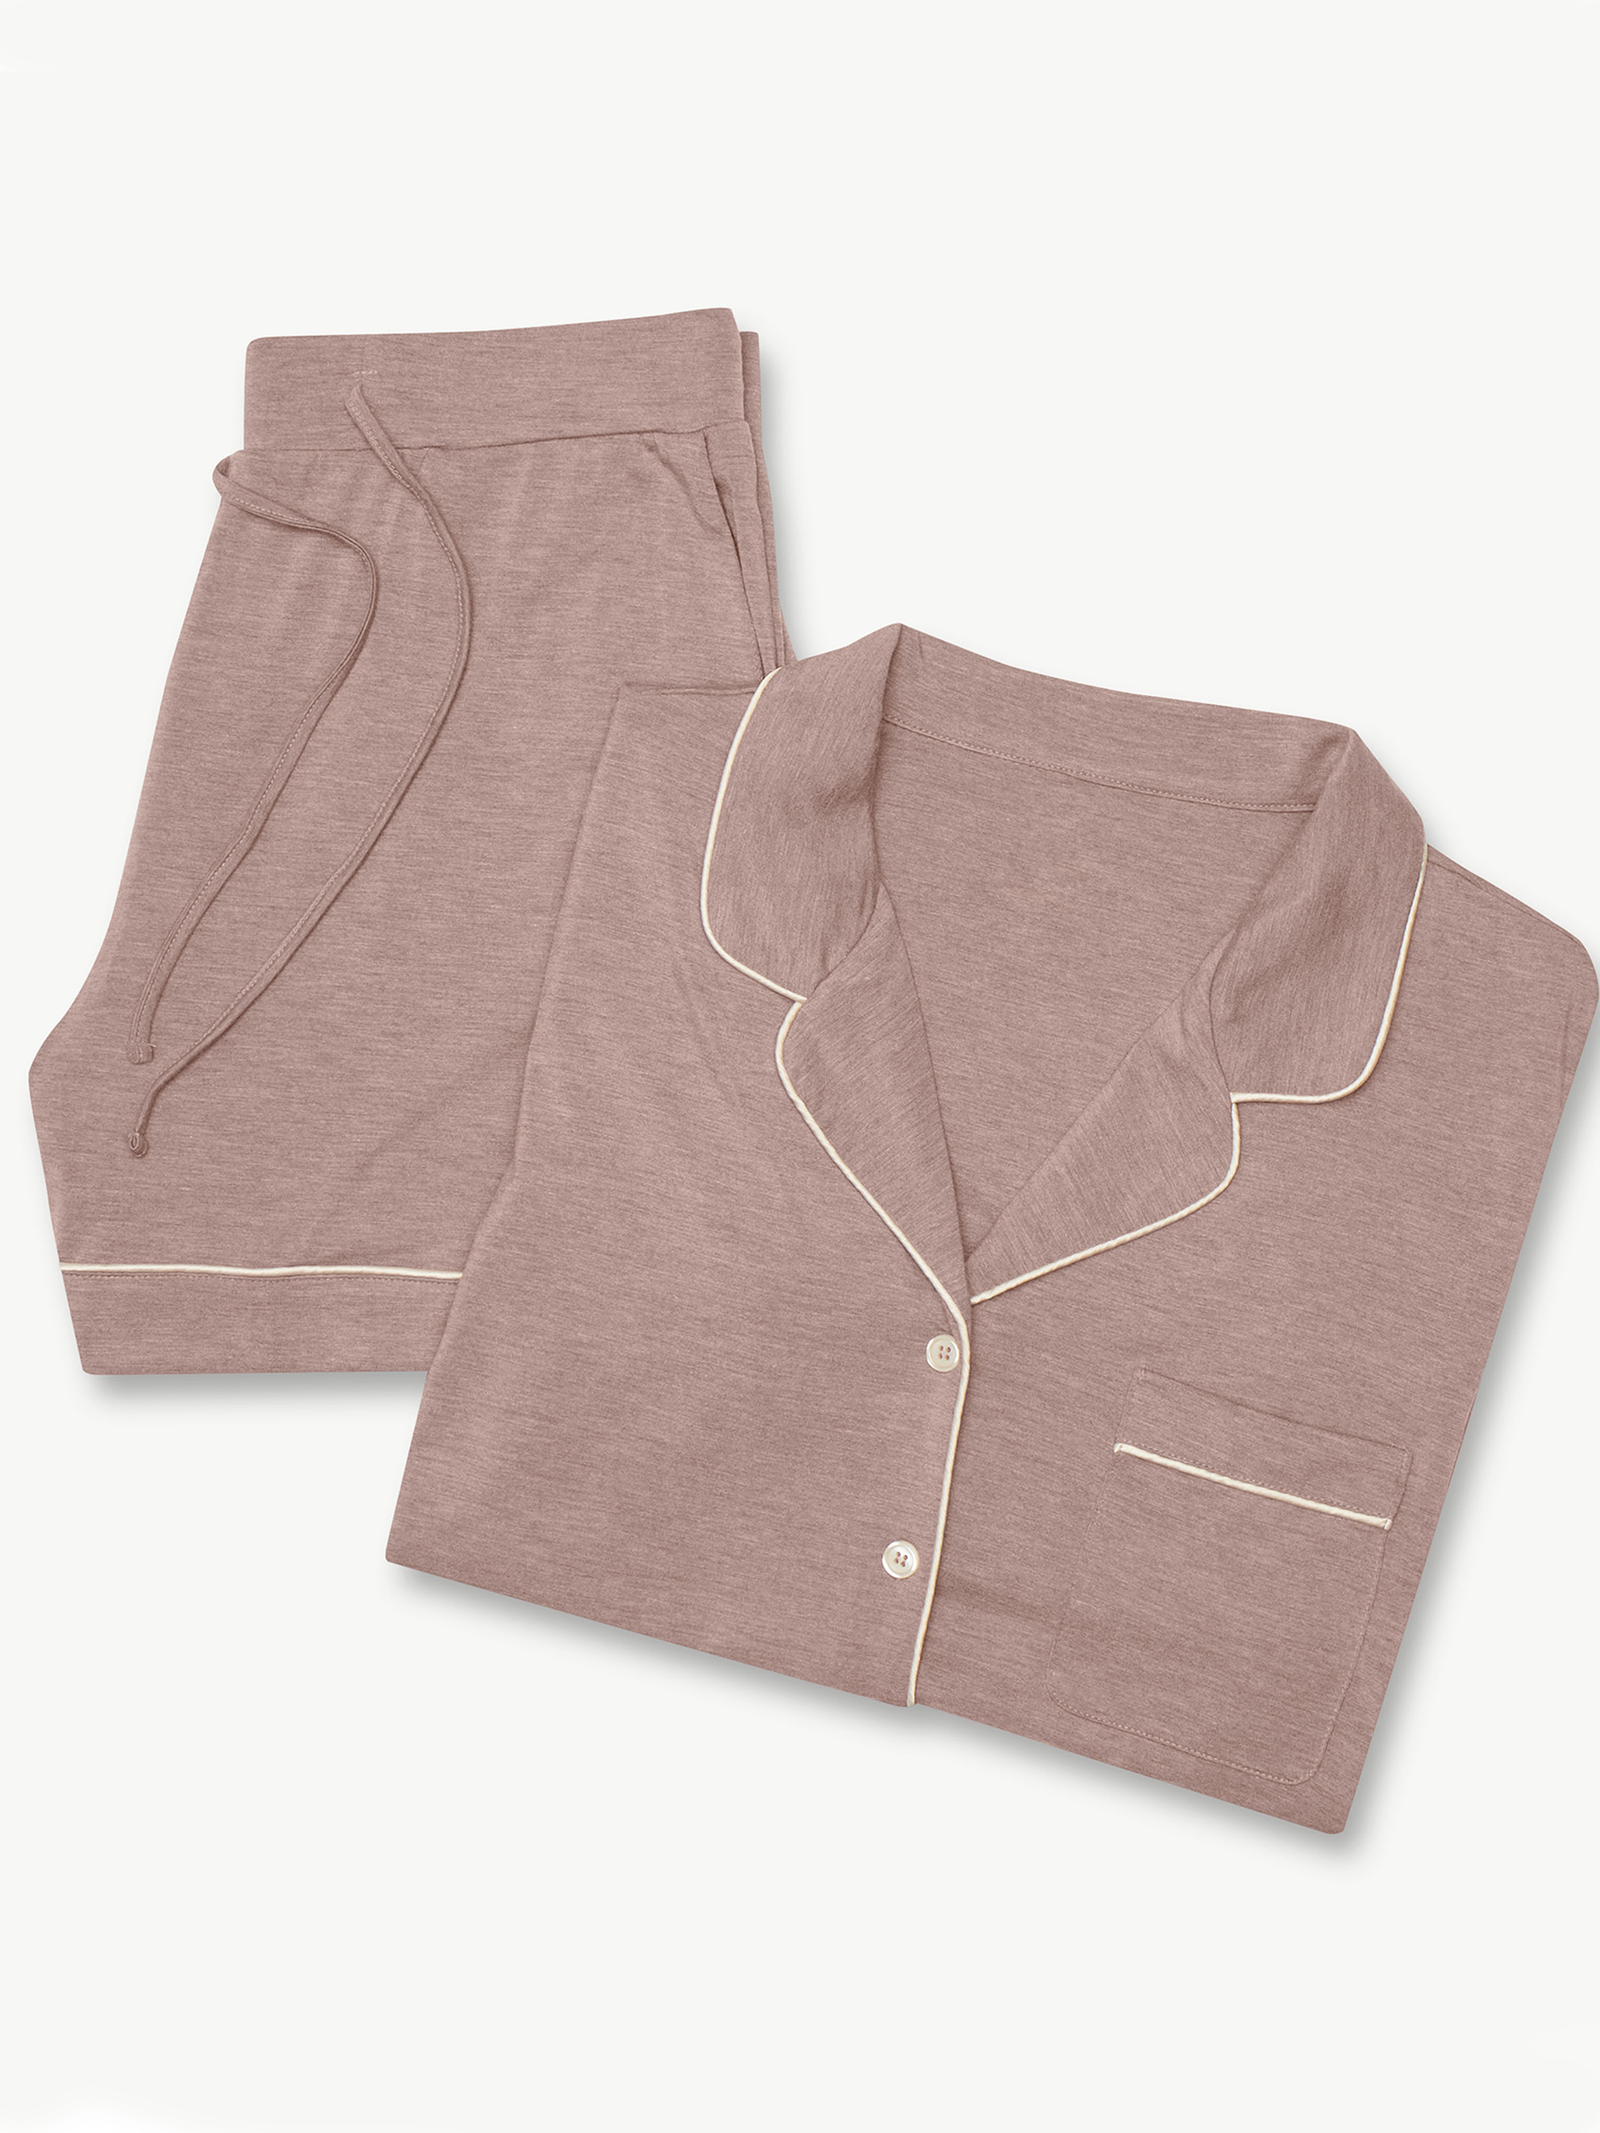 Buy Womens Cooling Bamboo Sleep/Night Shirts Button Down Short Sleeve Pajama  Tops Sleepwear S-XXL, Dusty Blue, XX-Large at